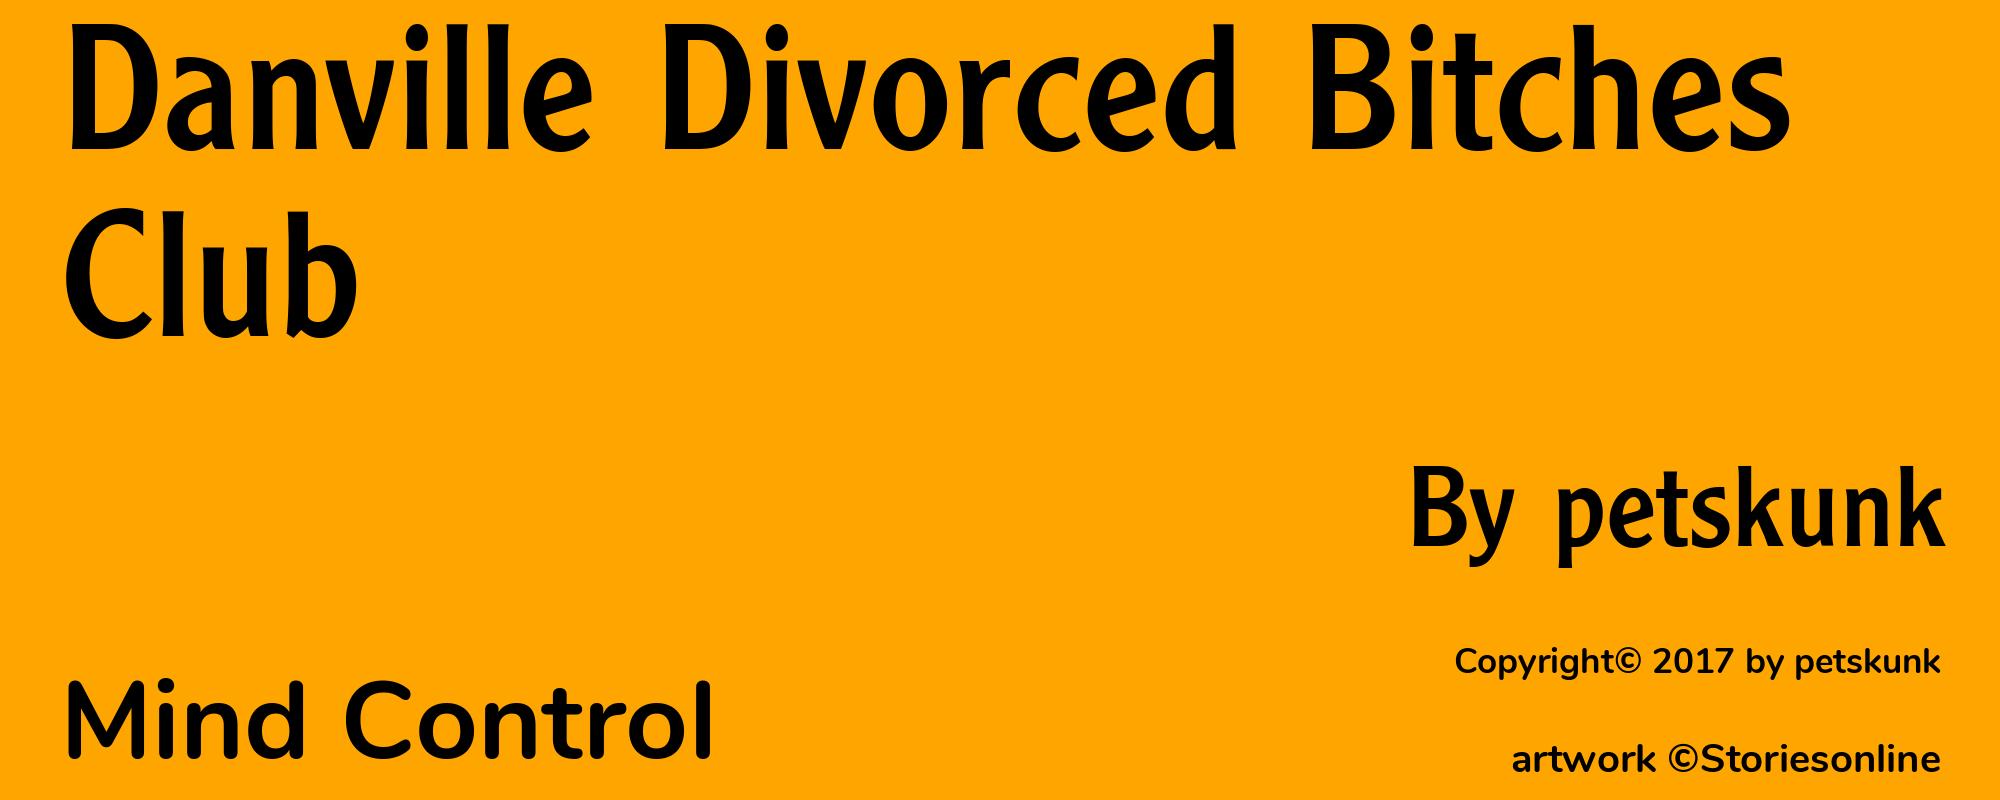 Danville Divorced Bitches Club - Cover